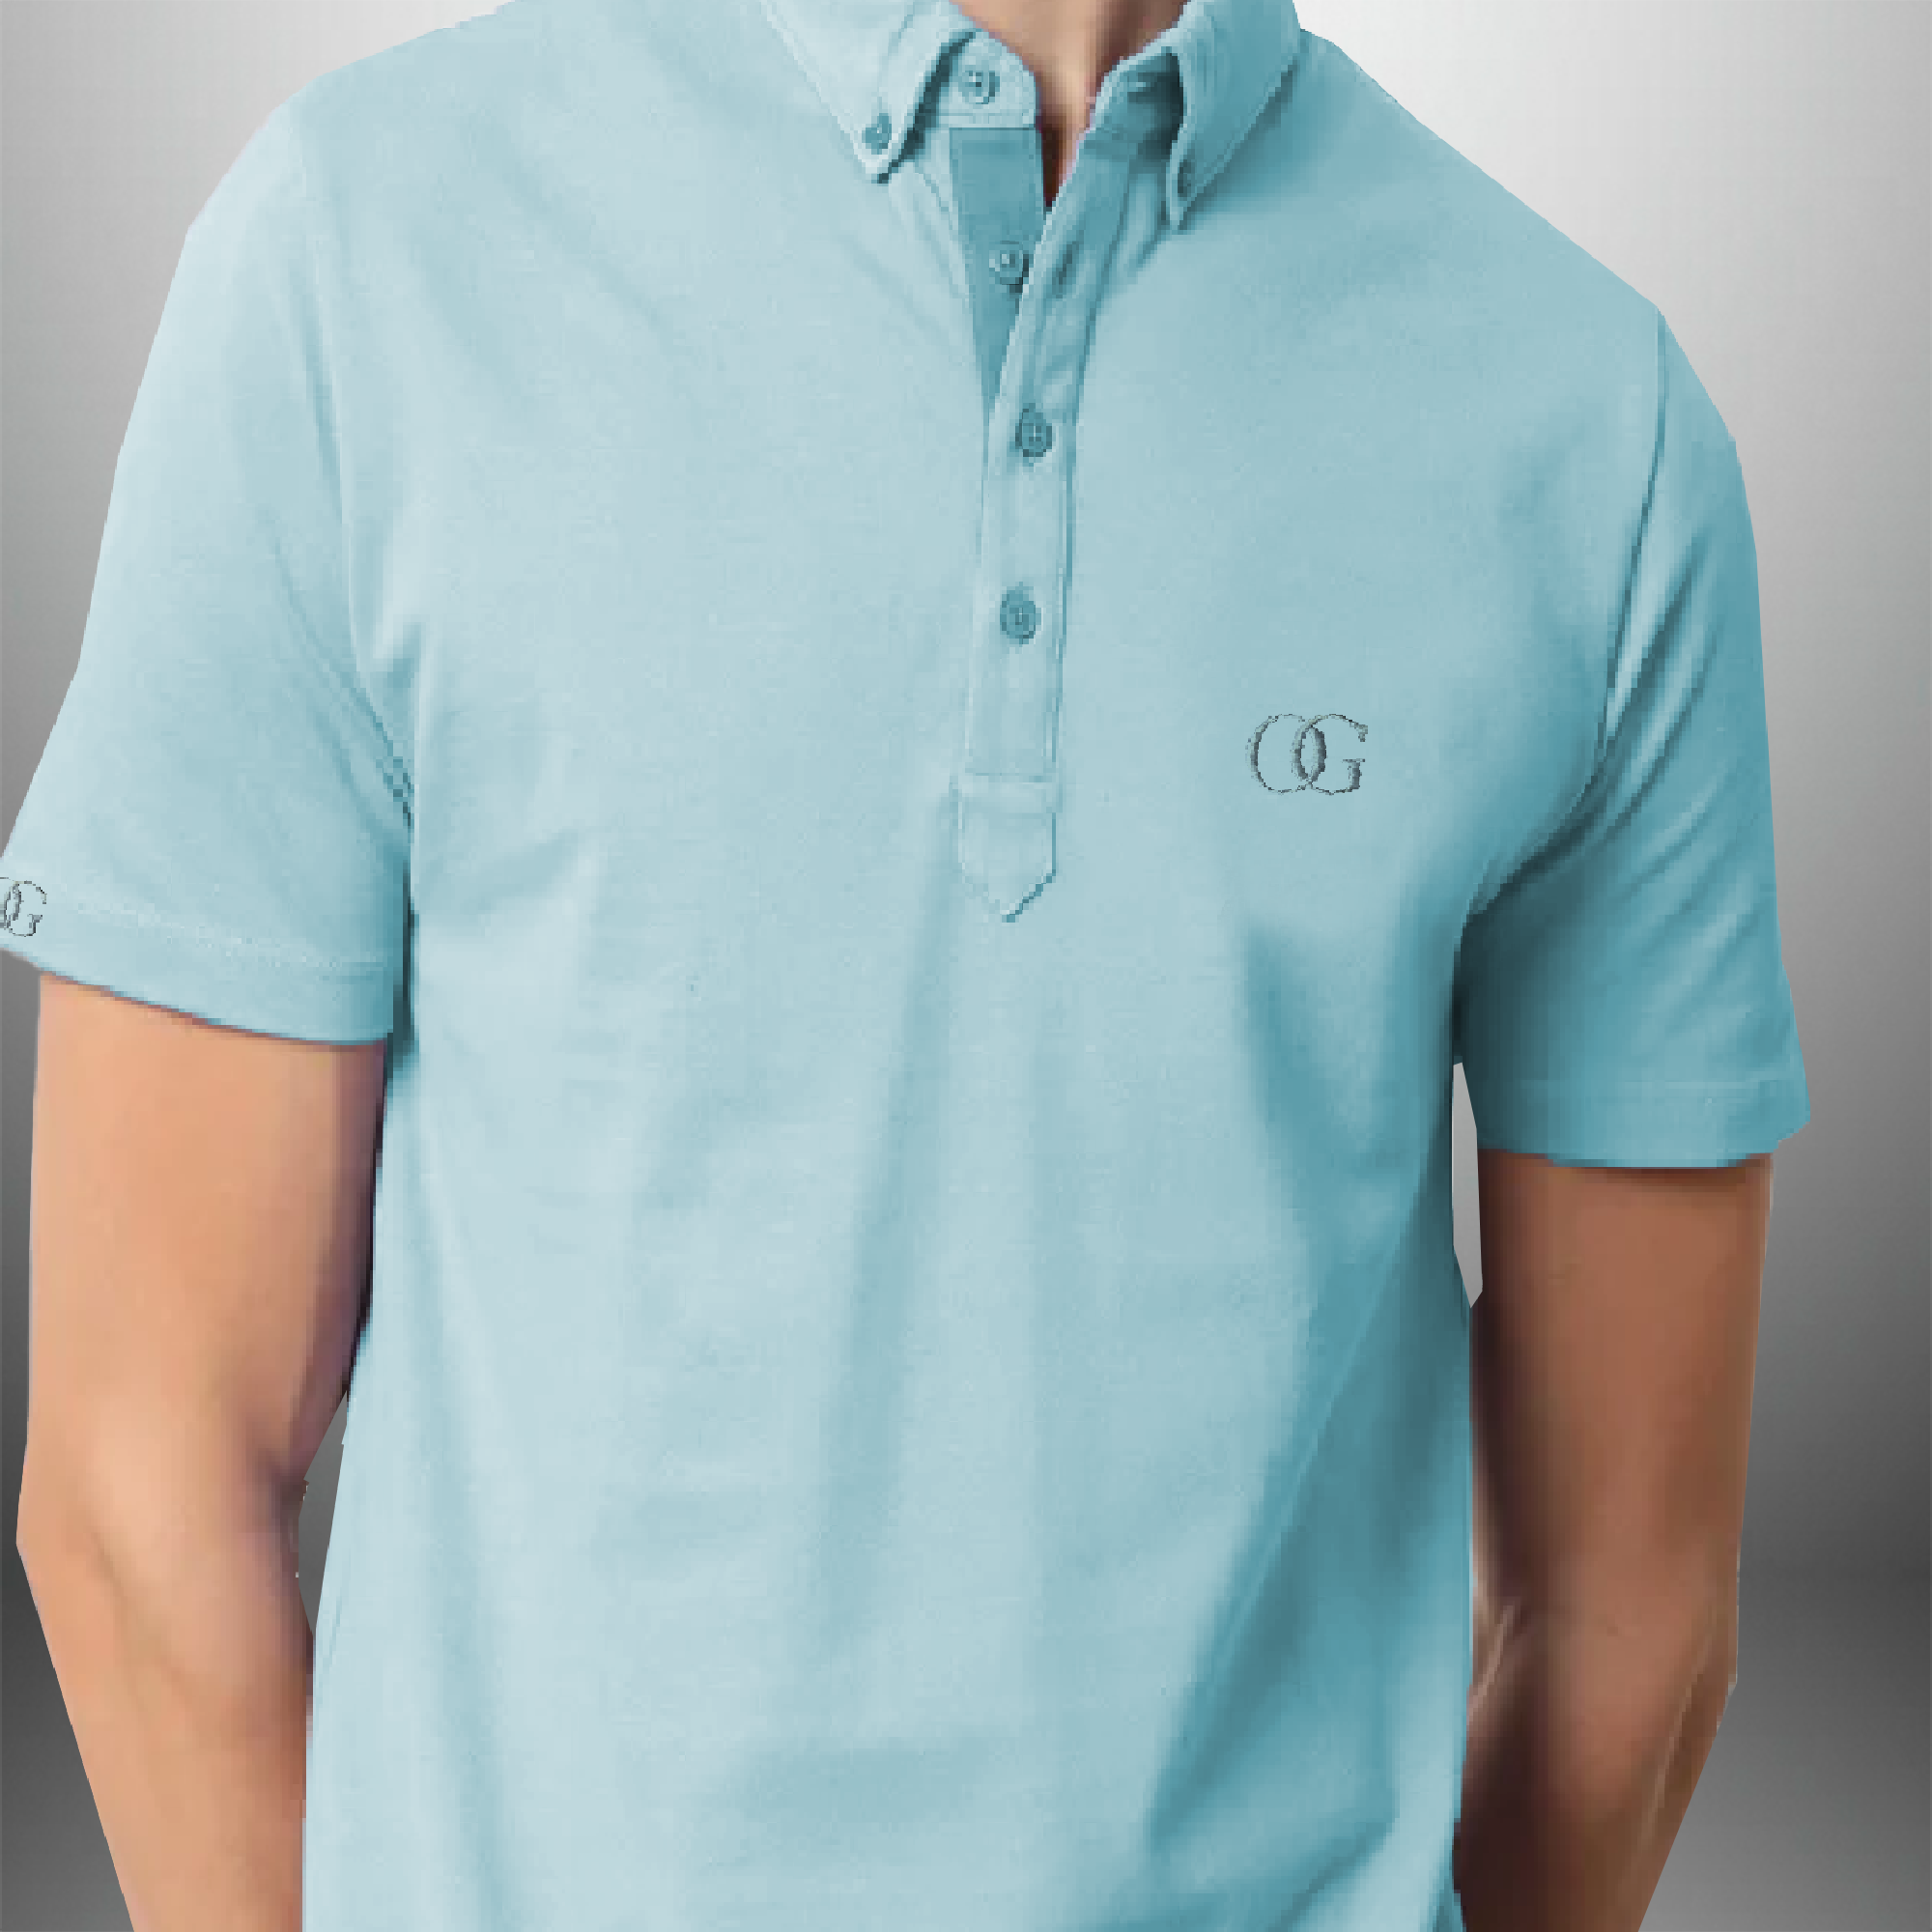 Men's ice blue collared T-shirt with OG logo-RKTM012